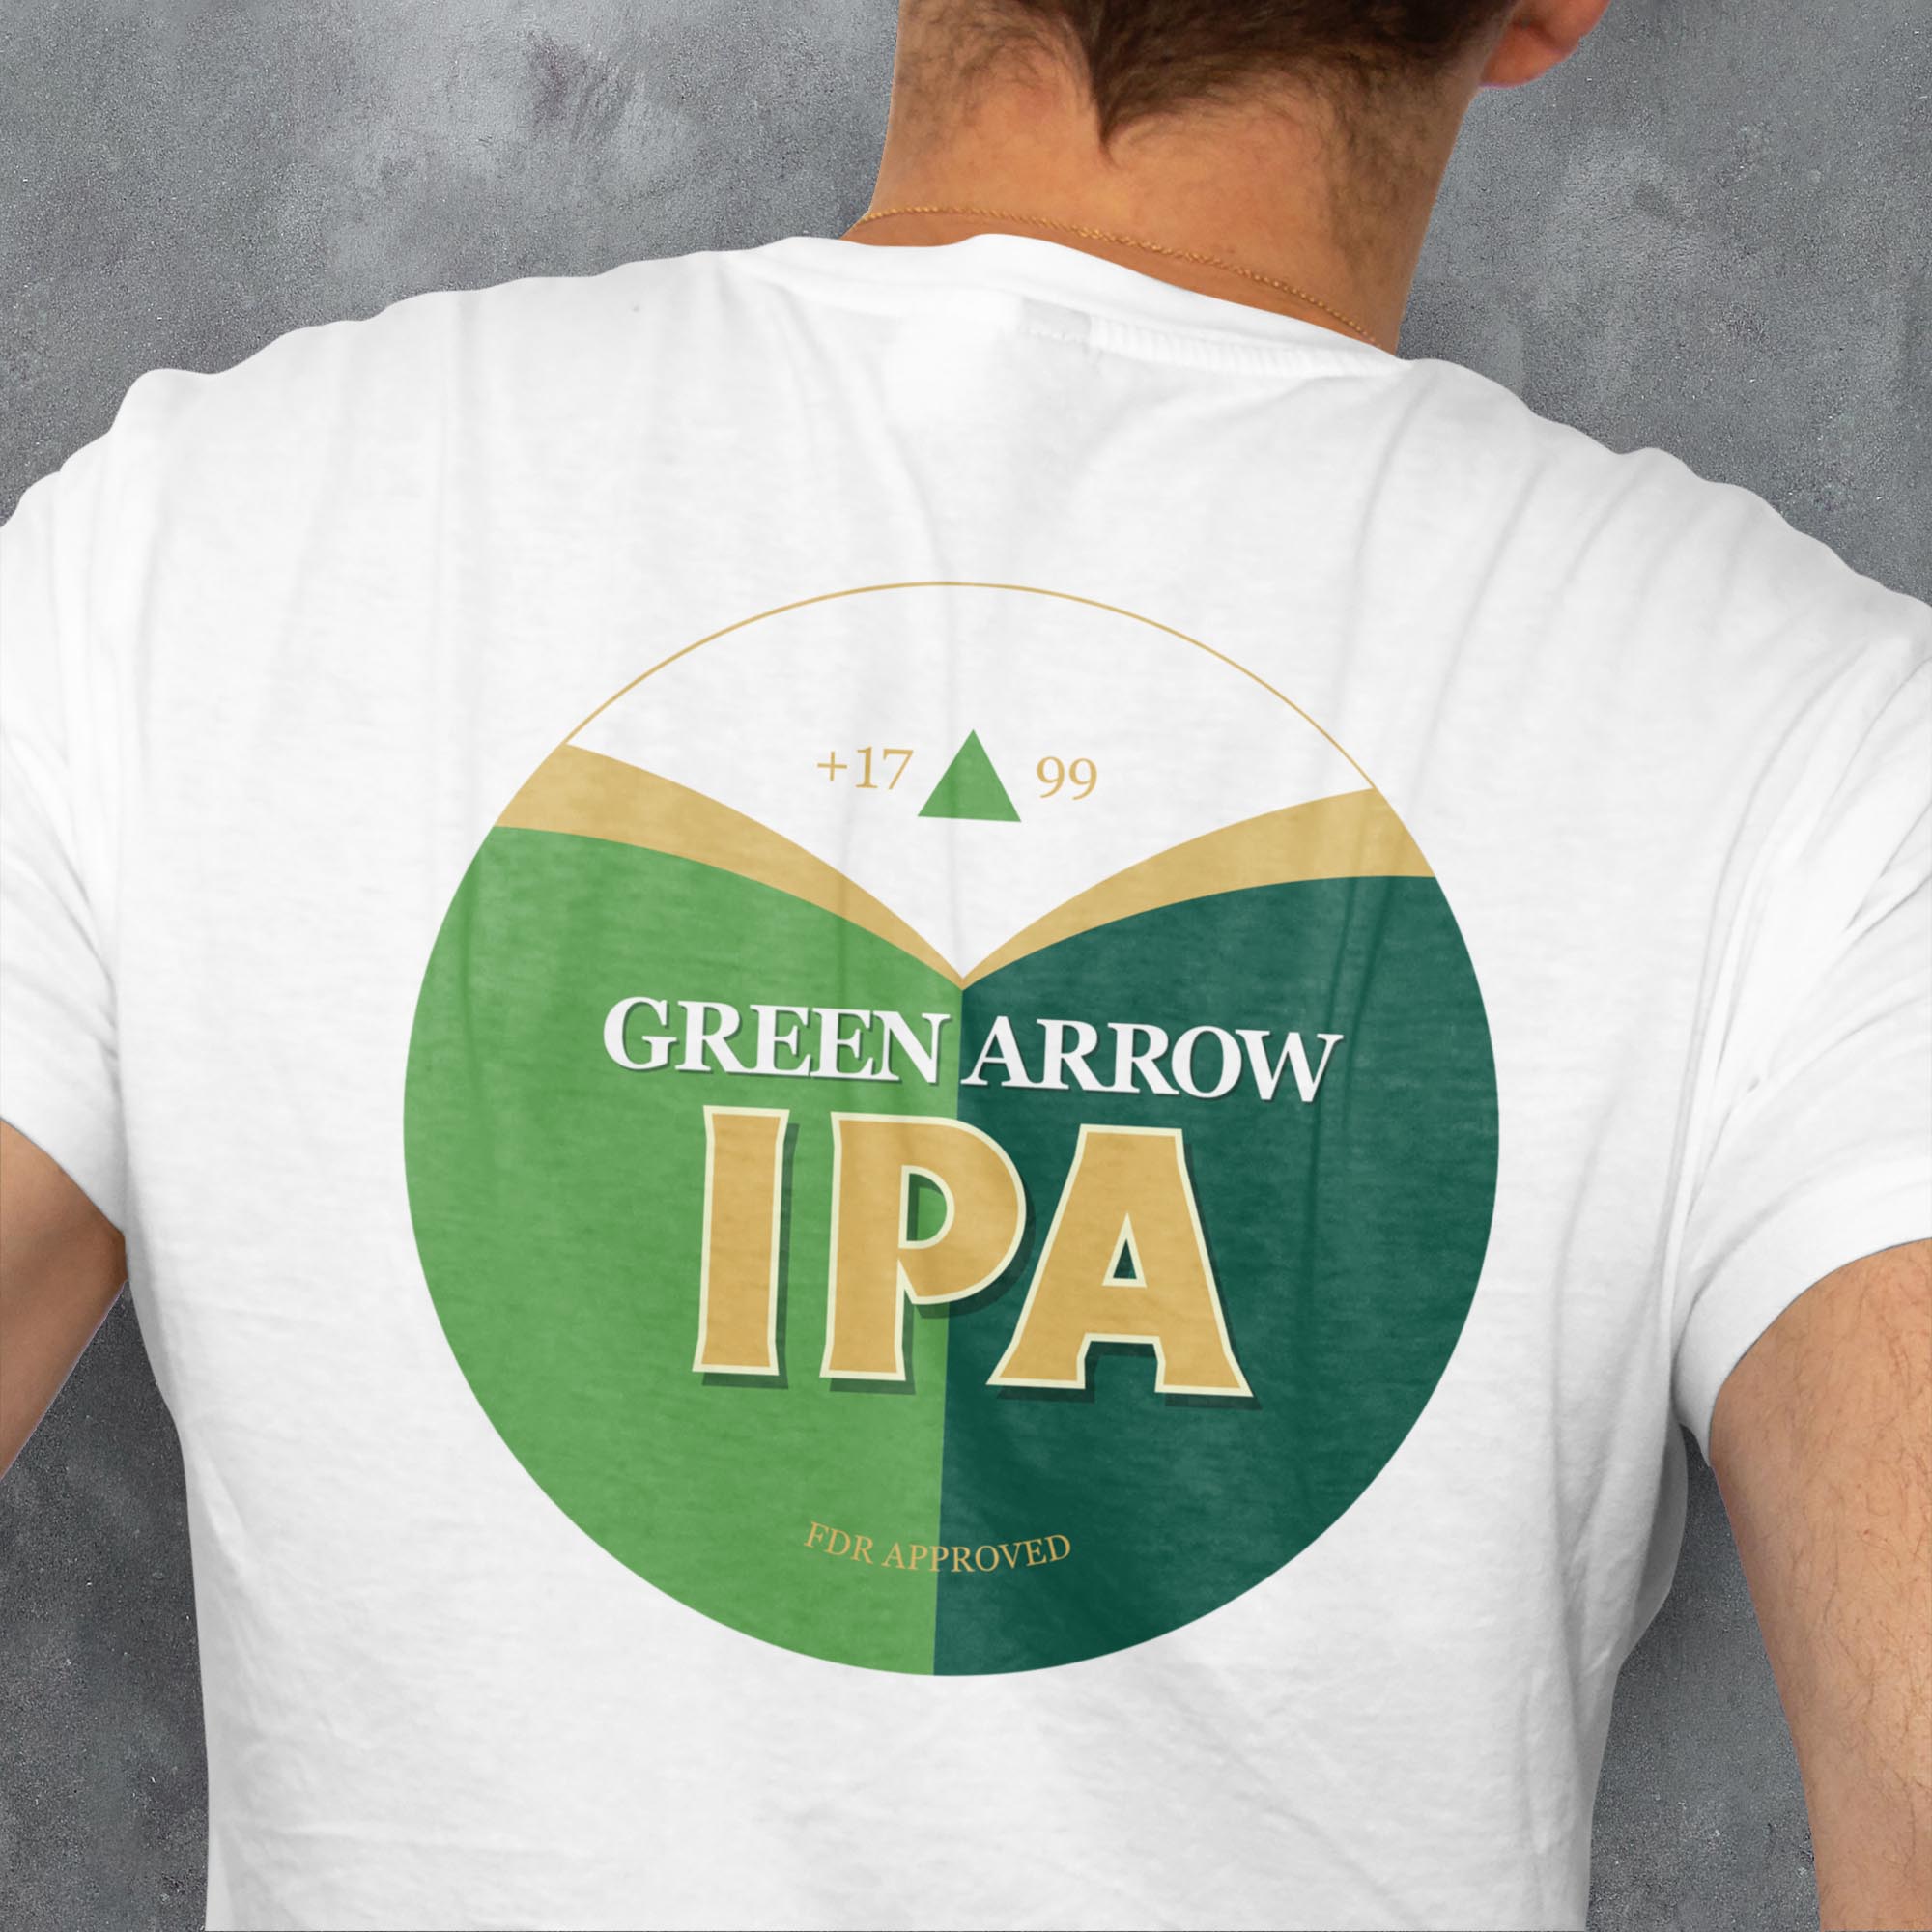 Fantasy League Football FPL 'Off The Bar' Green Arrow IPA T-Shirt Good Team On Paper